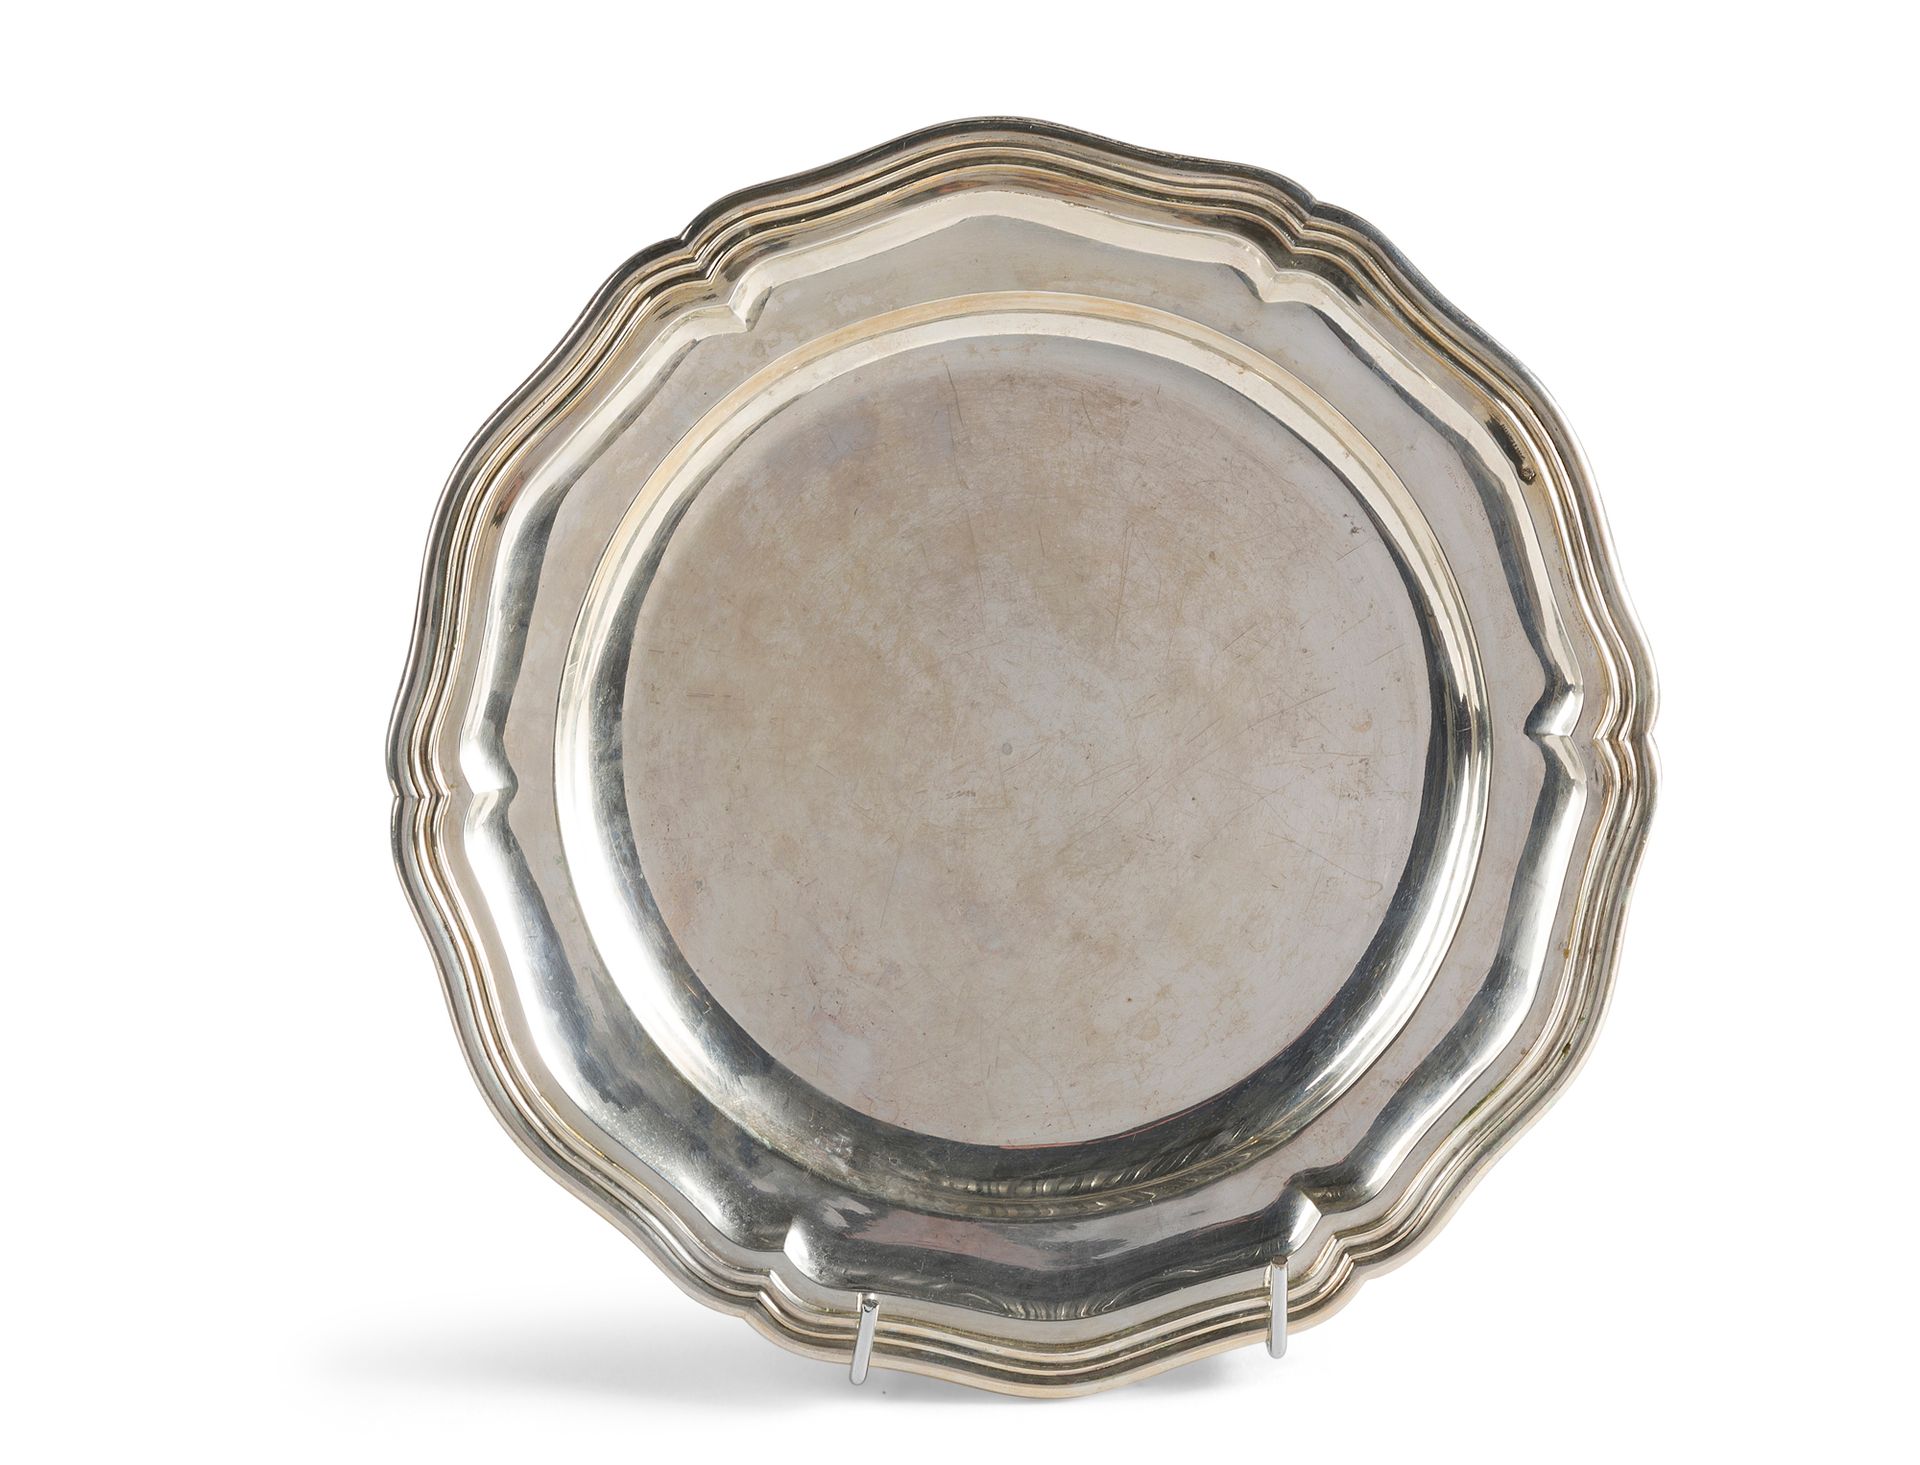 Null 圆形多裂纹银盘（第800号），带鱼鳞的边框。

Goldsmith BACHRUCH继承。

奥地利

直径28.5厘米

重量700克